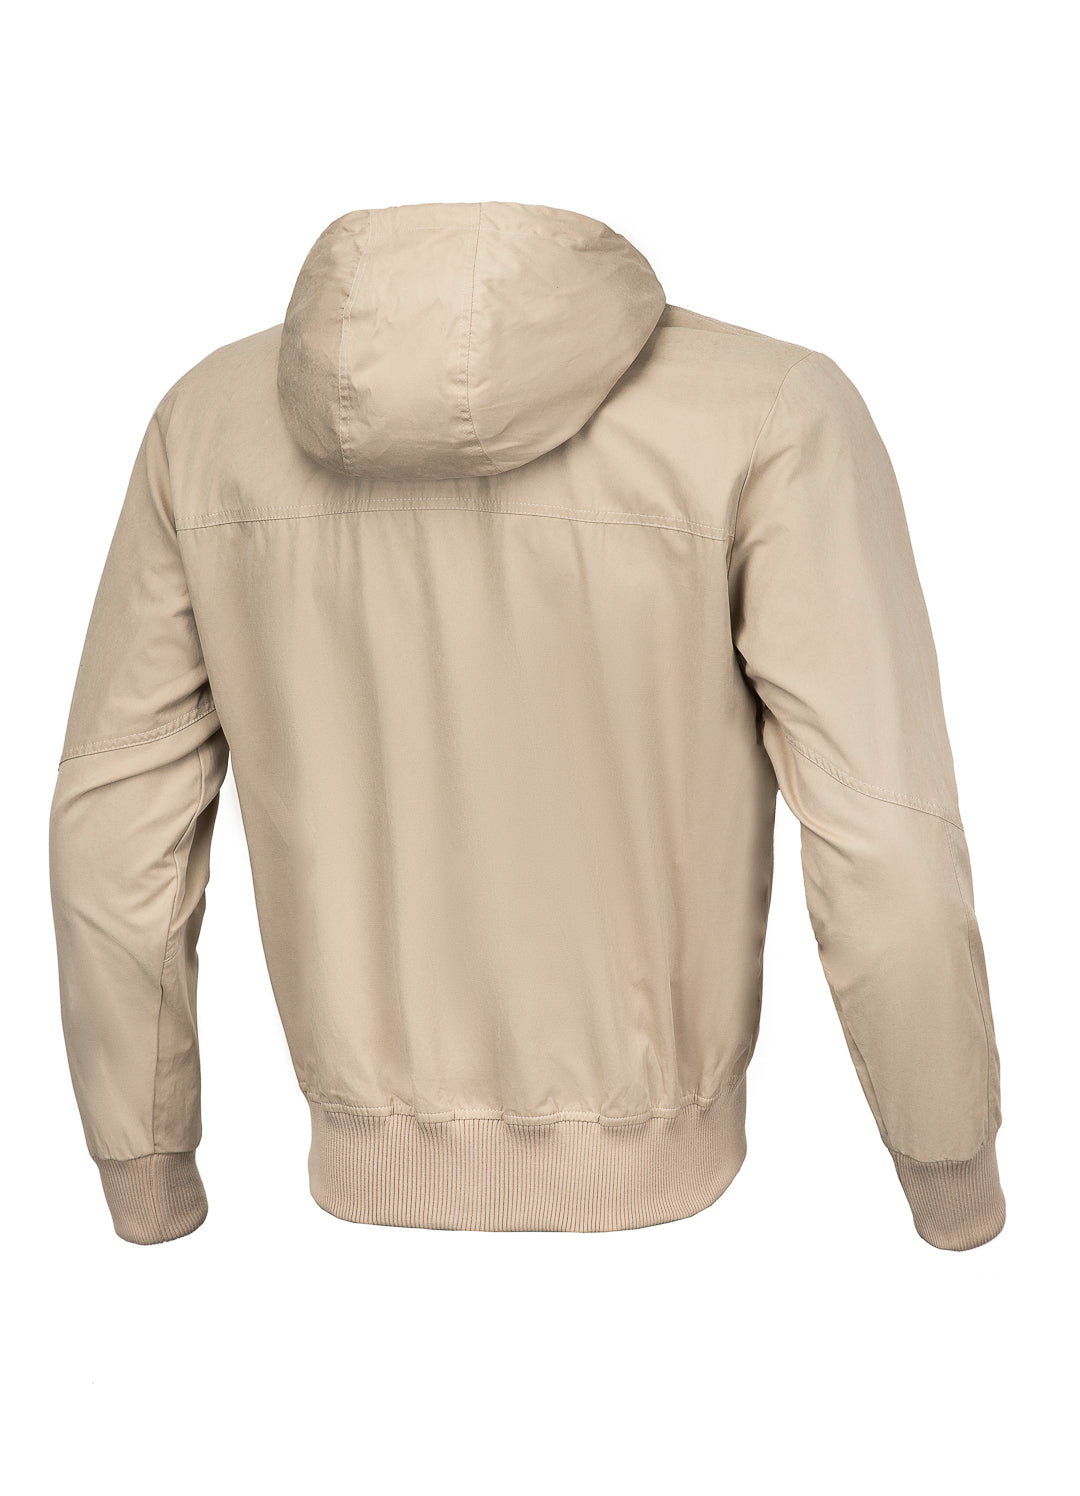 Hooded Jacket ARILLO Sand - Pitbull West Coast International Store 